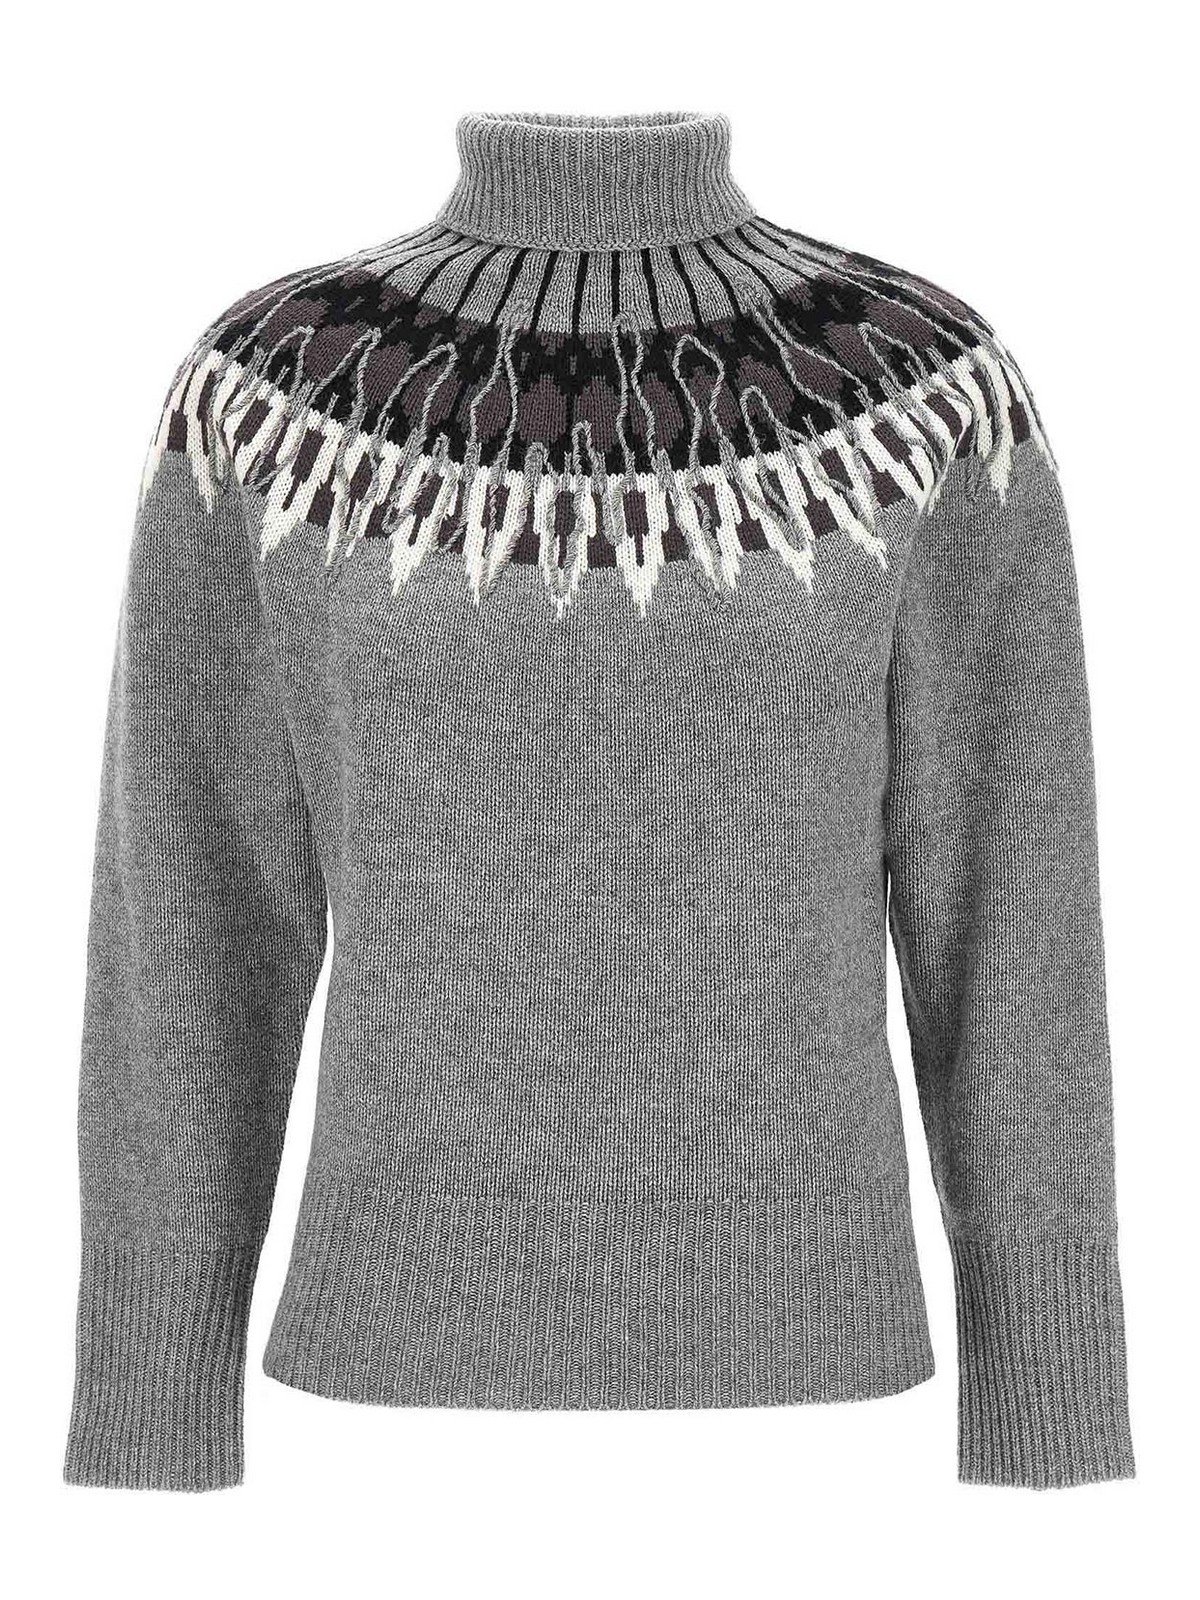 Fabiana Filippi Sequin Jacquard Sweater In Grey